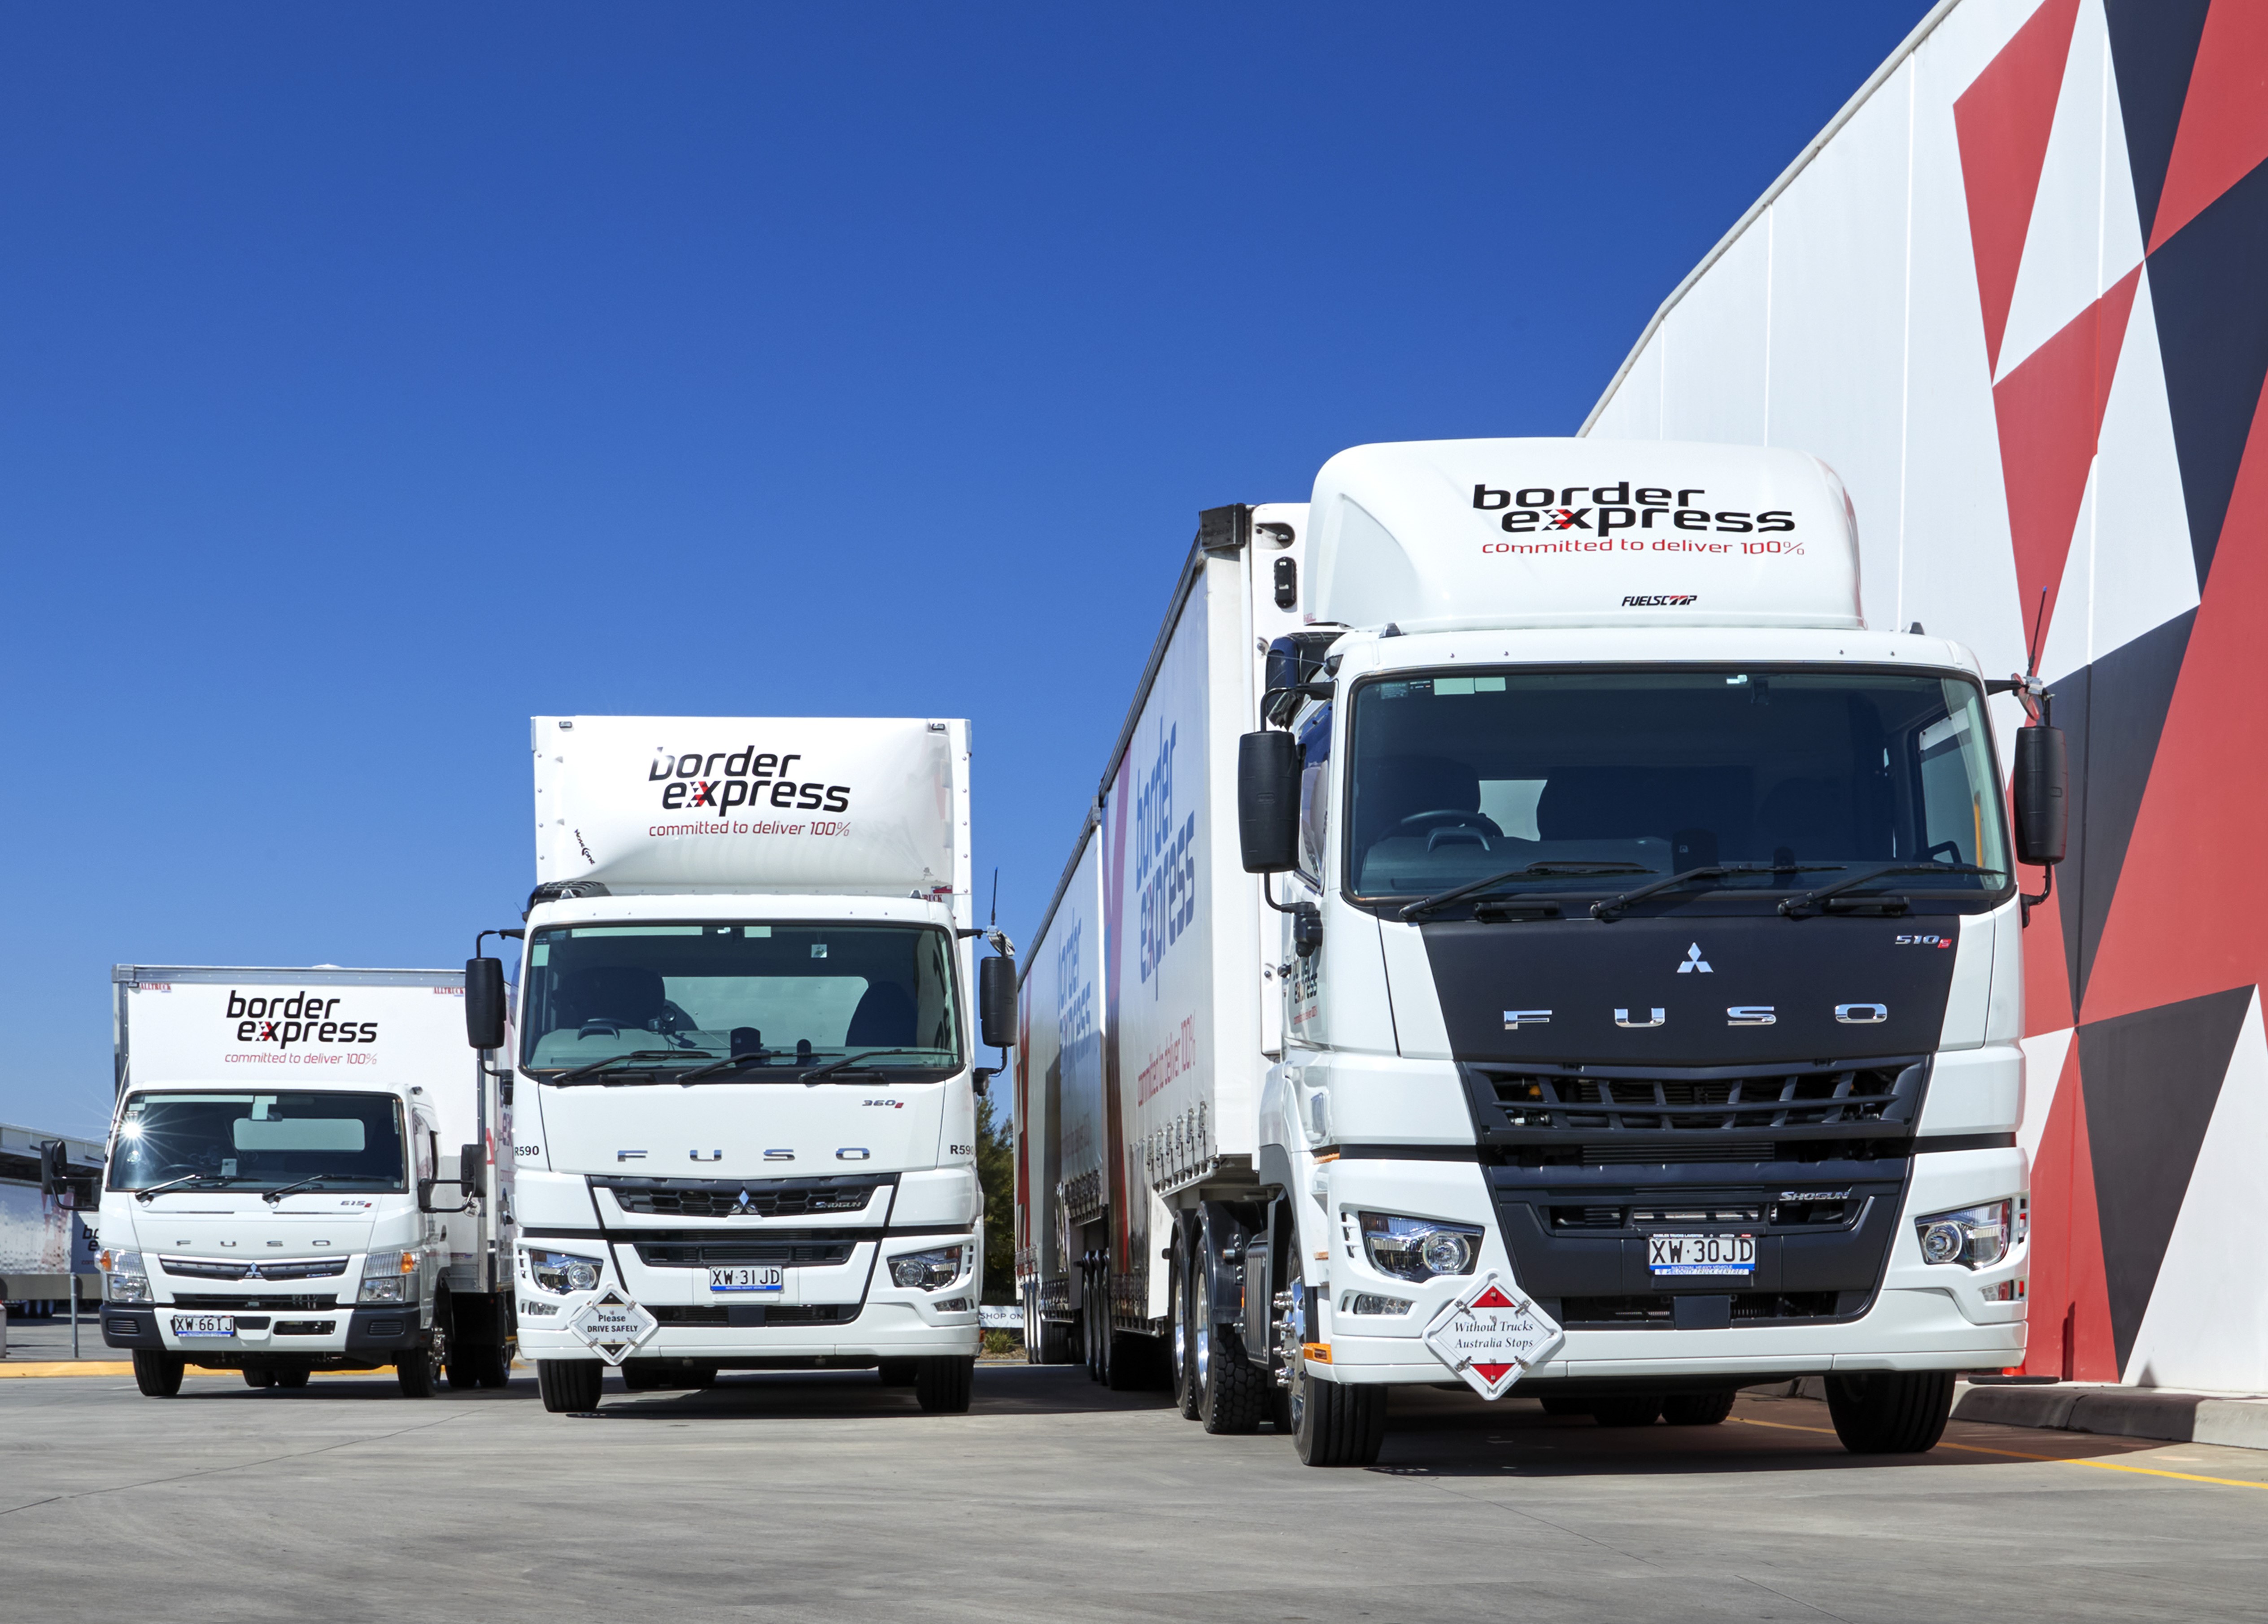 Border Express upgrades fleet with 78 Fuso trucks